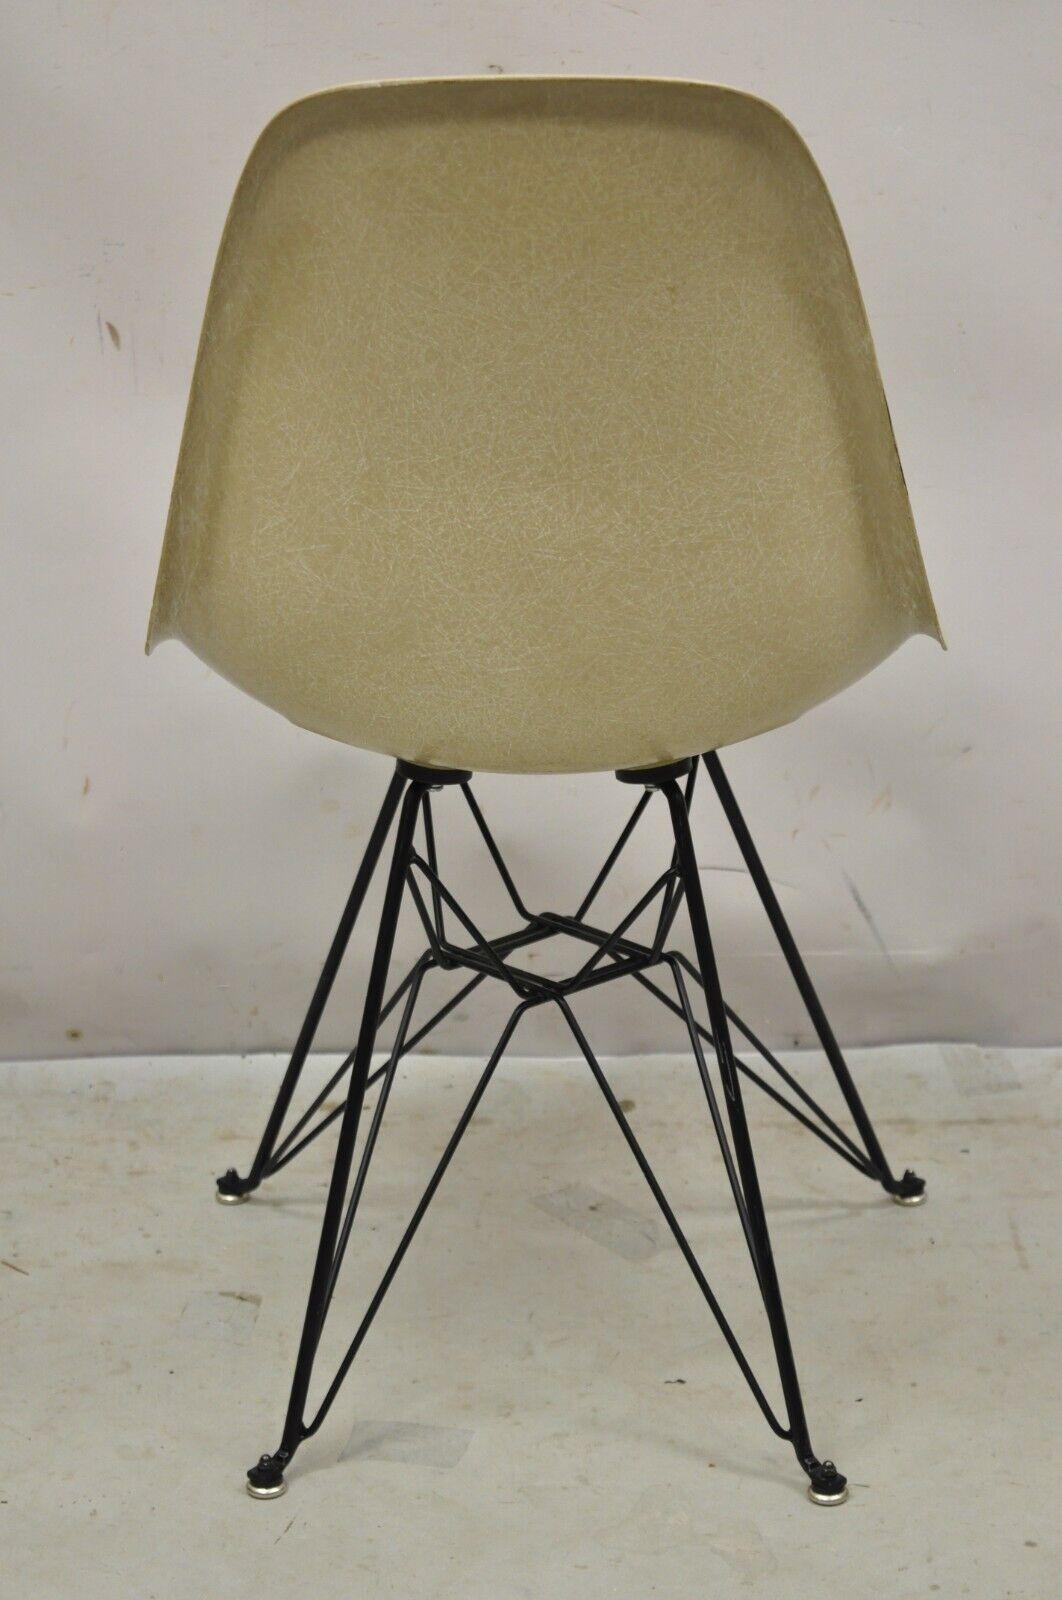 Modernica Case Study Oatmeal Fiberglass Side Chair with Black Metal Base (B) 1